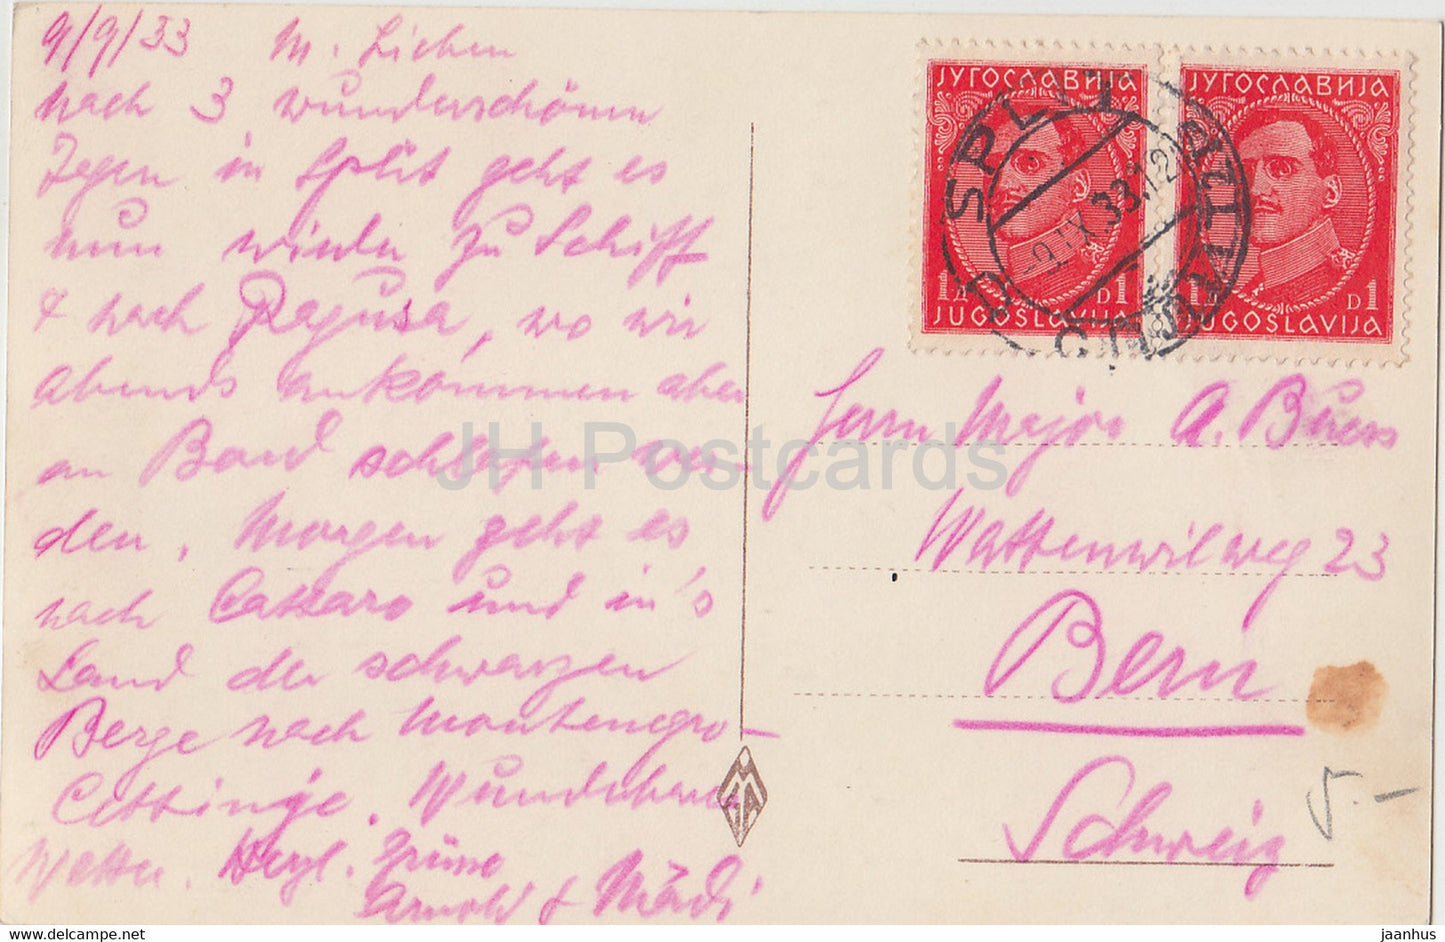 Split - Zvonik - Stolne crkve - belfry - 10 - old postcard - 1933 - Yugoslavia - Croatia - used